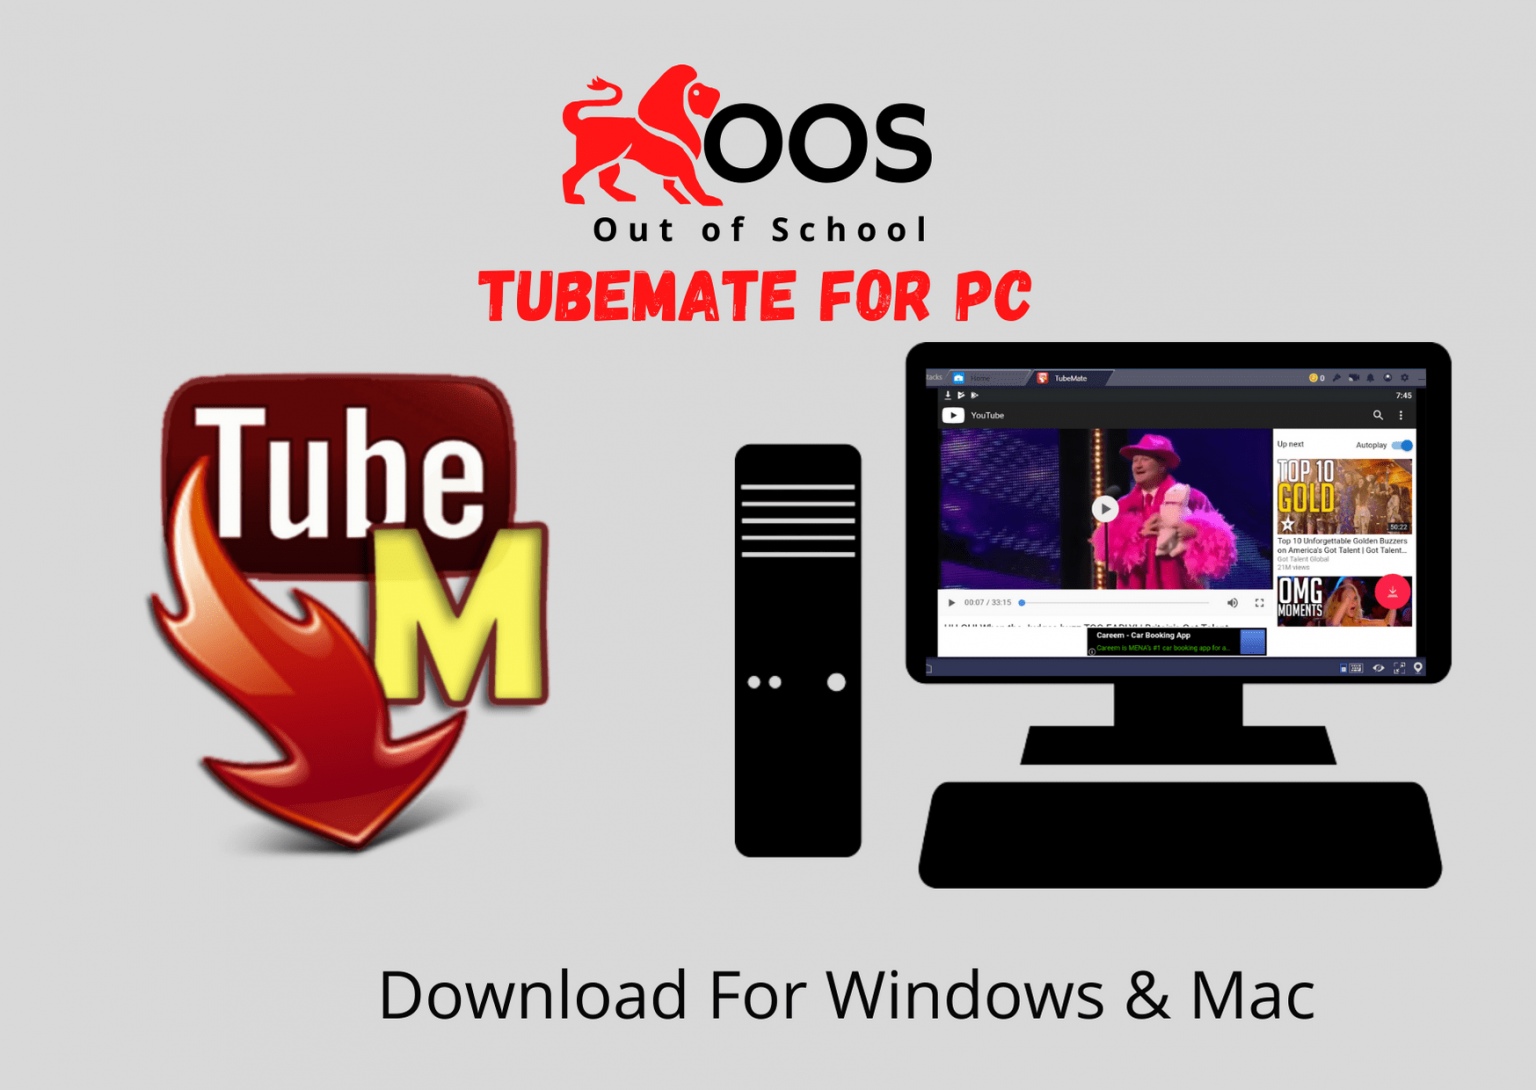 download tubemate for windows 7 ultimate 64 bit